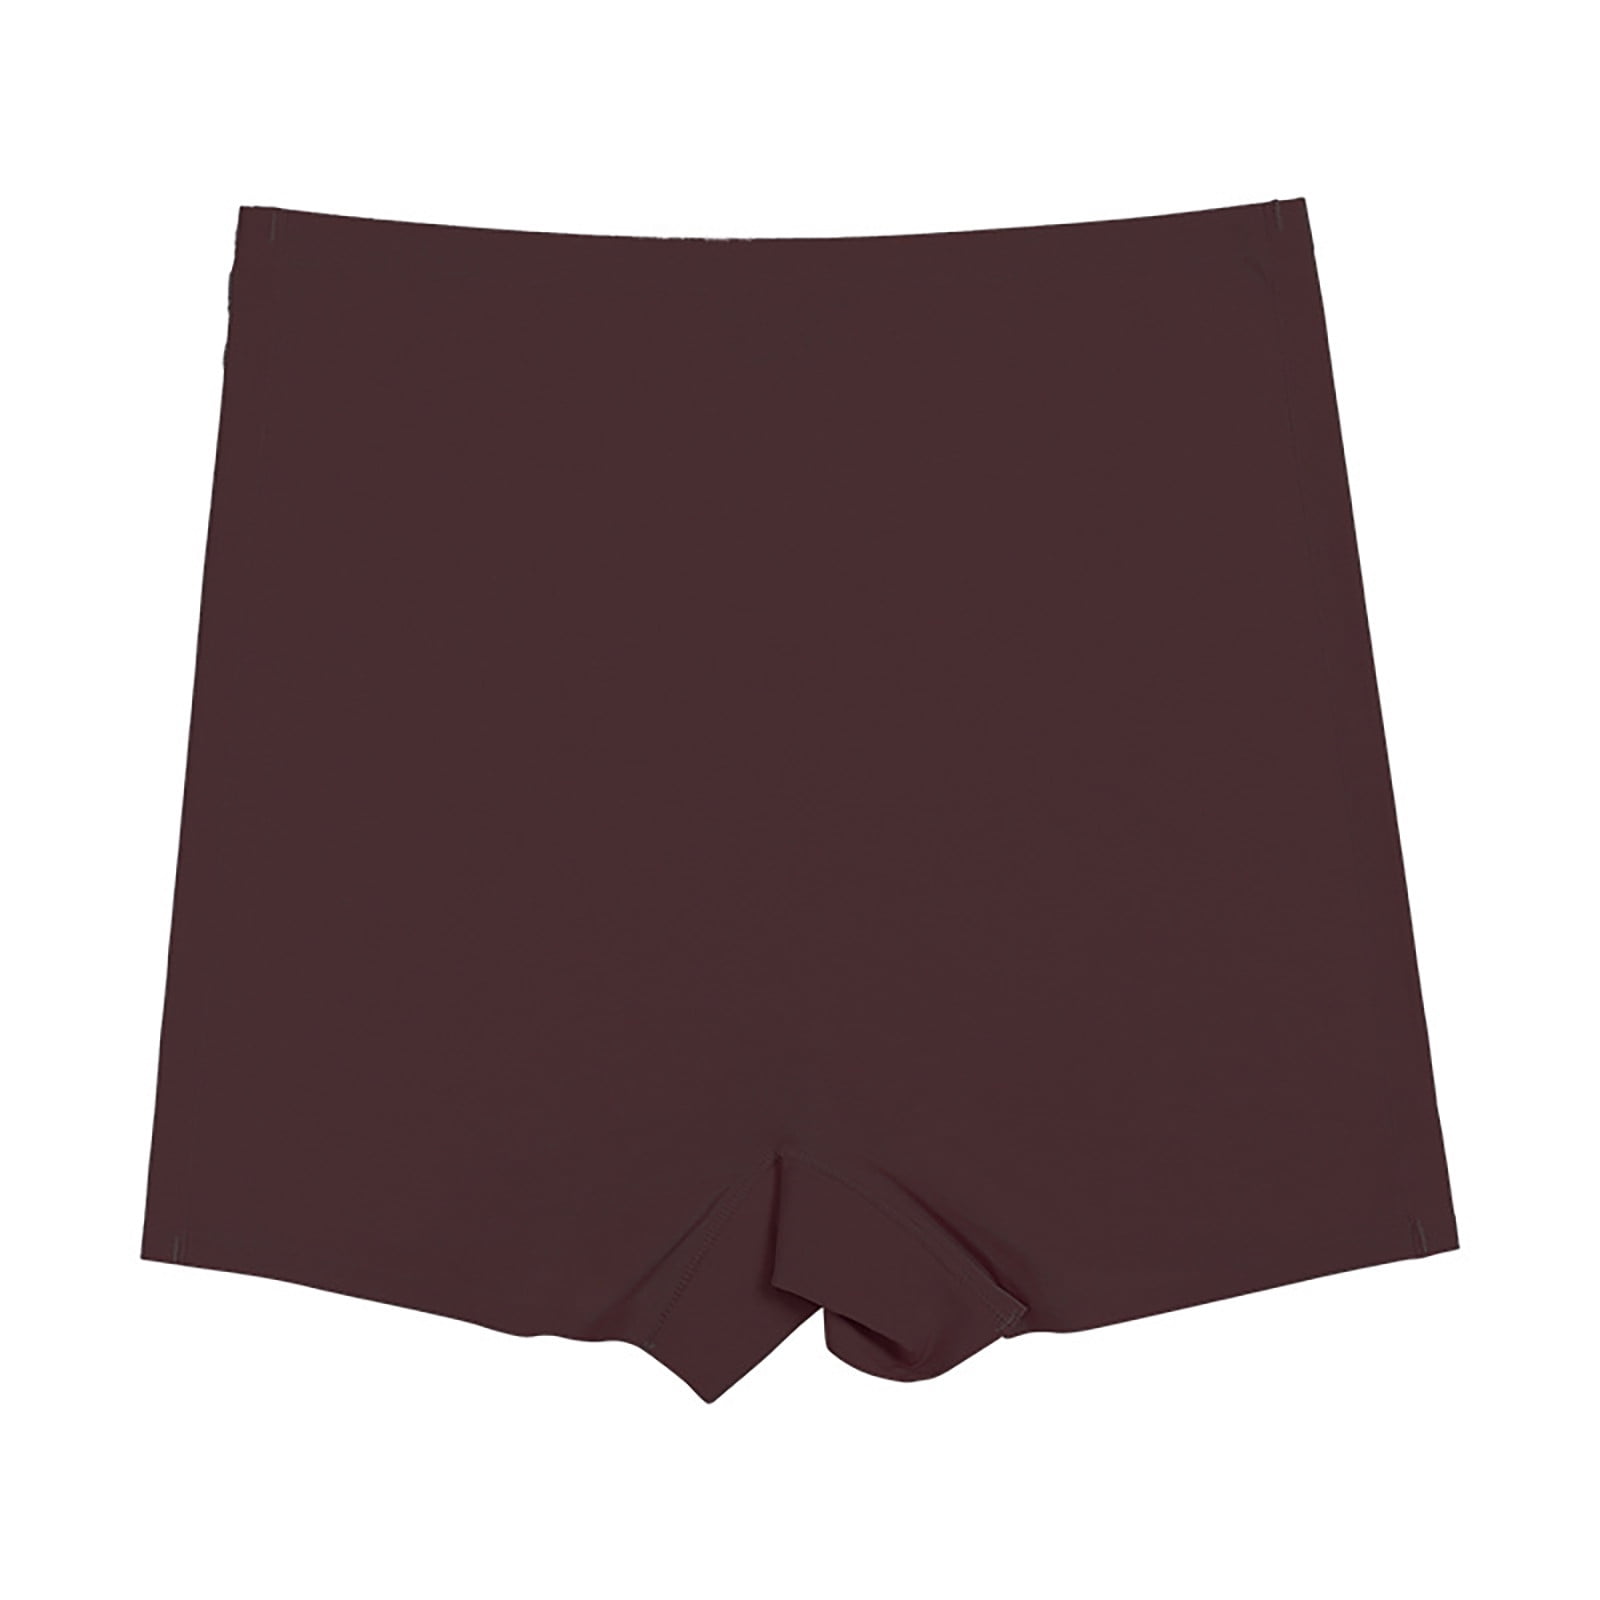 Knosfe Women's Boy Shorts Underwear Seamless Anti Chafing High